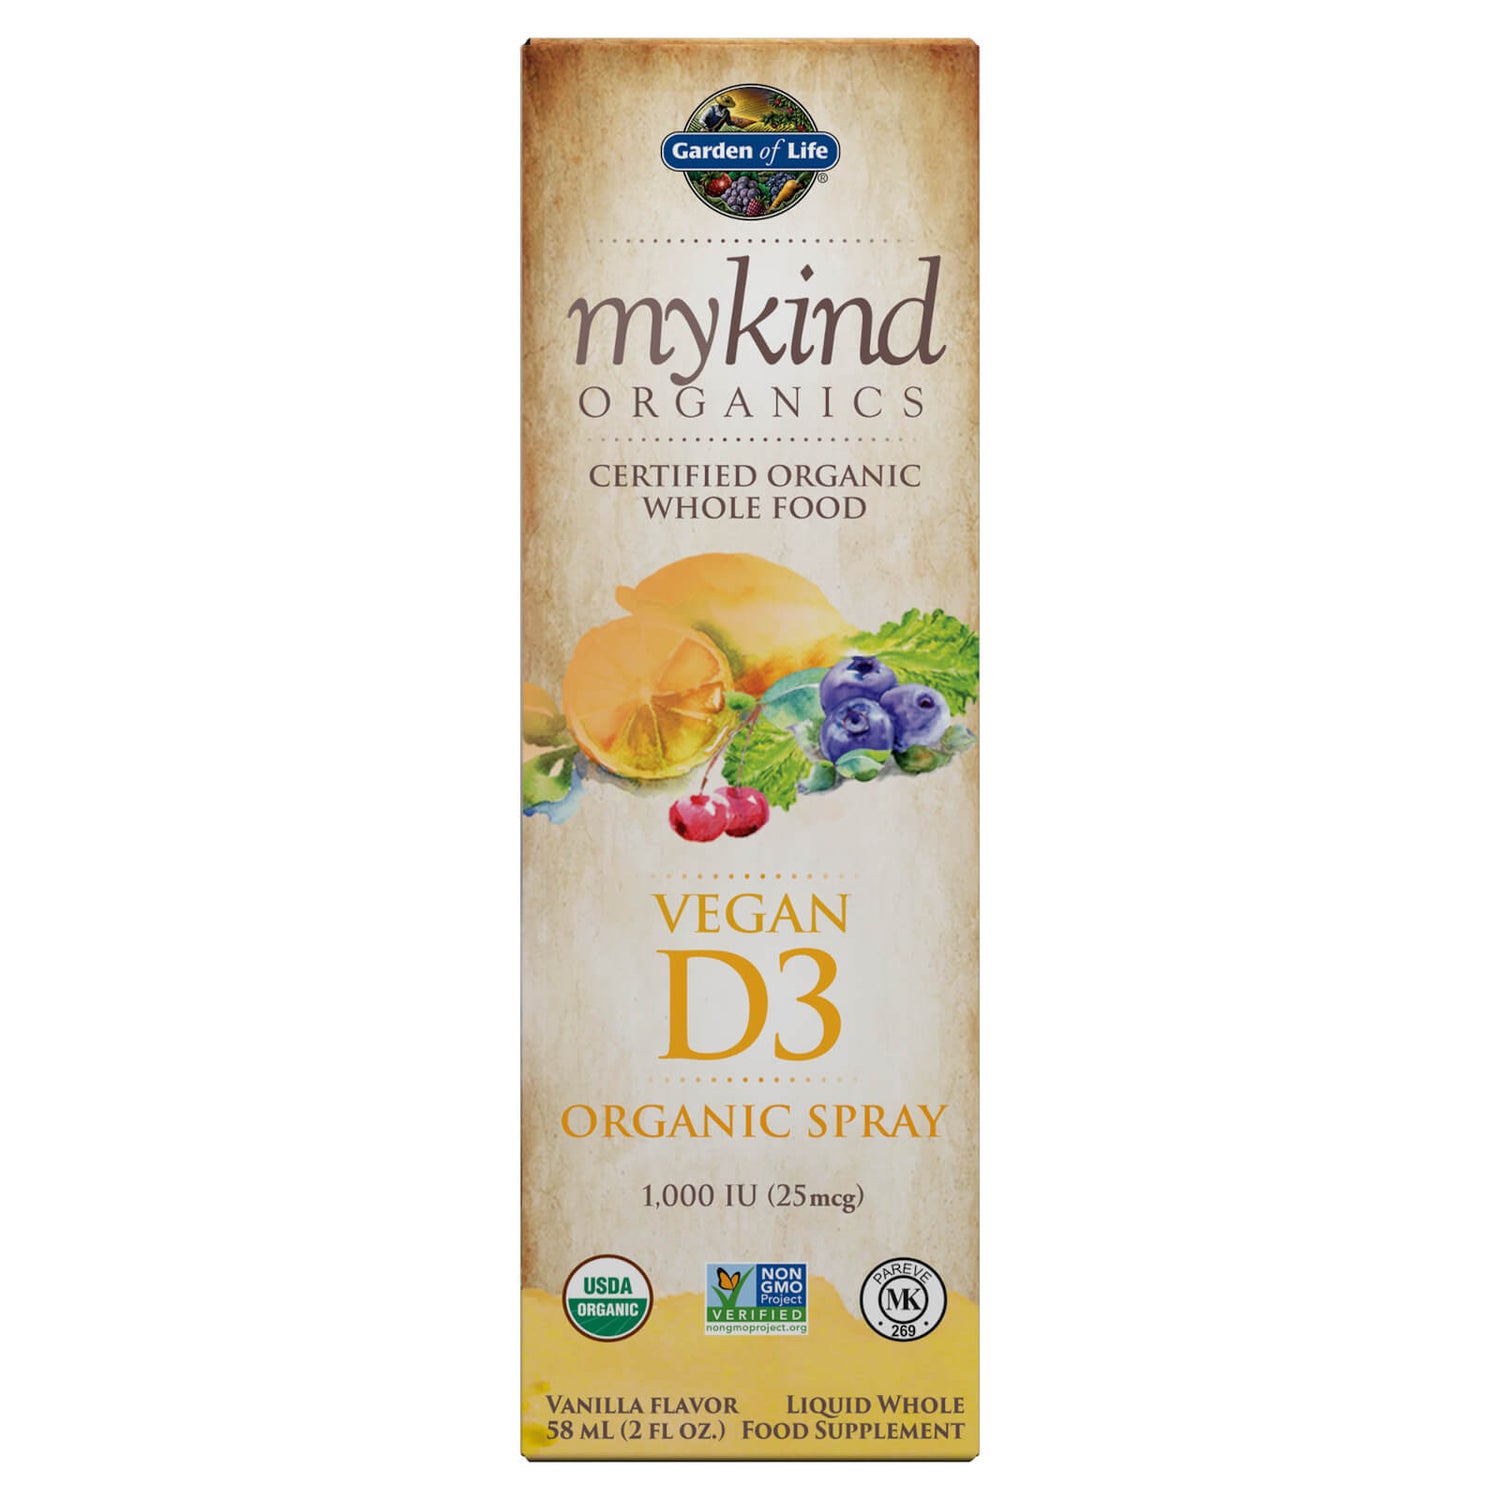 mykind Organics Vegan D3